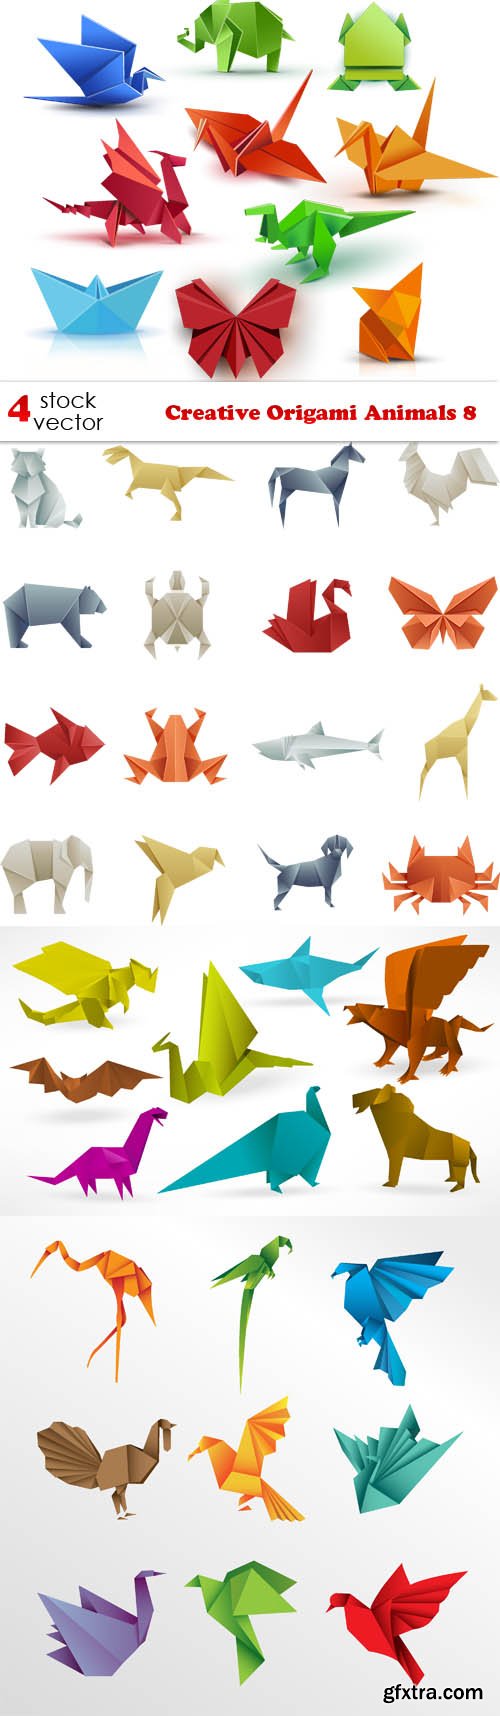 Vectors - Creative Origami Animals 8